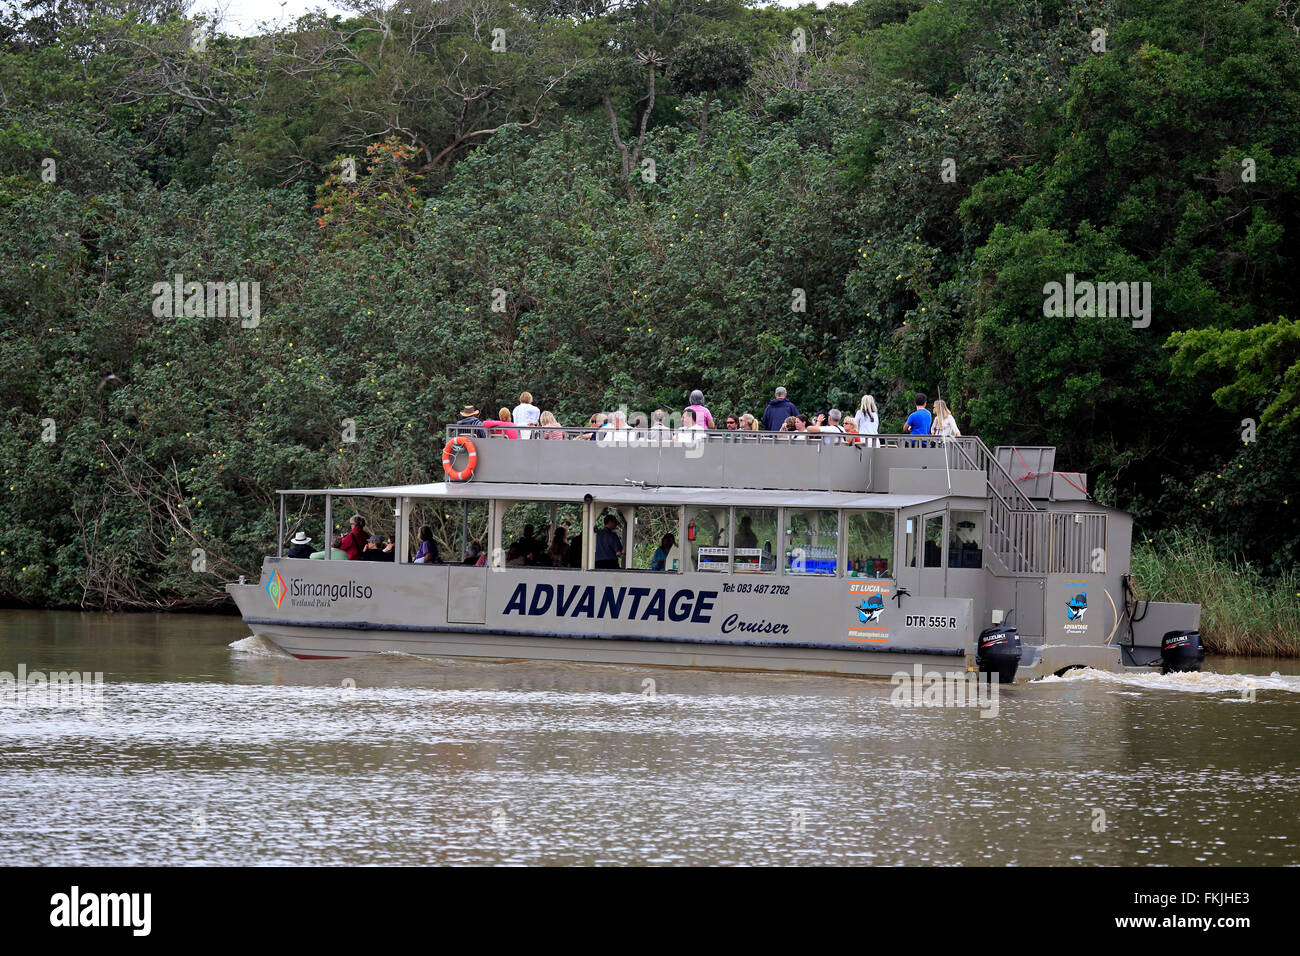 Escursione in barca, i turisti su safari in barca, St Lucia St Lucia Estuary, Isimangaliso Wetland Park, Kwazulu Natal, Sud Africa, Foto Stock